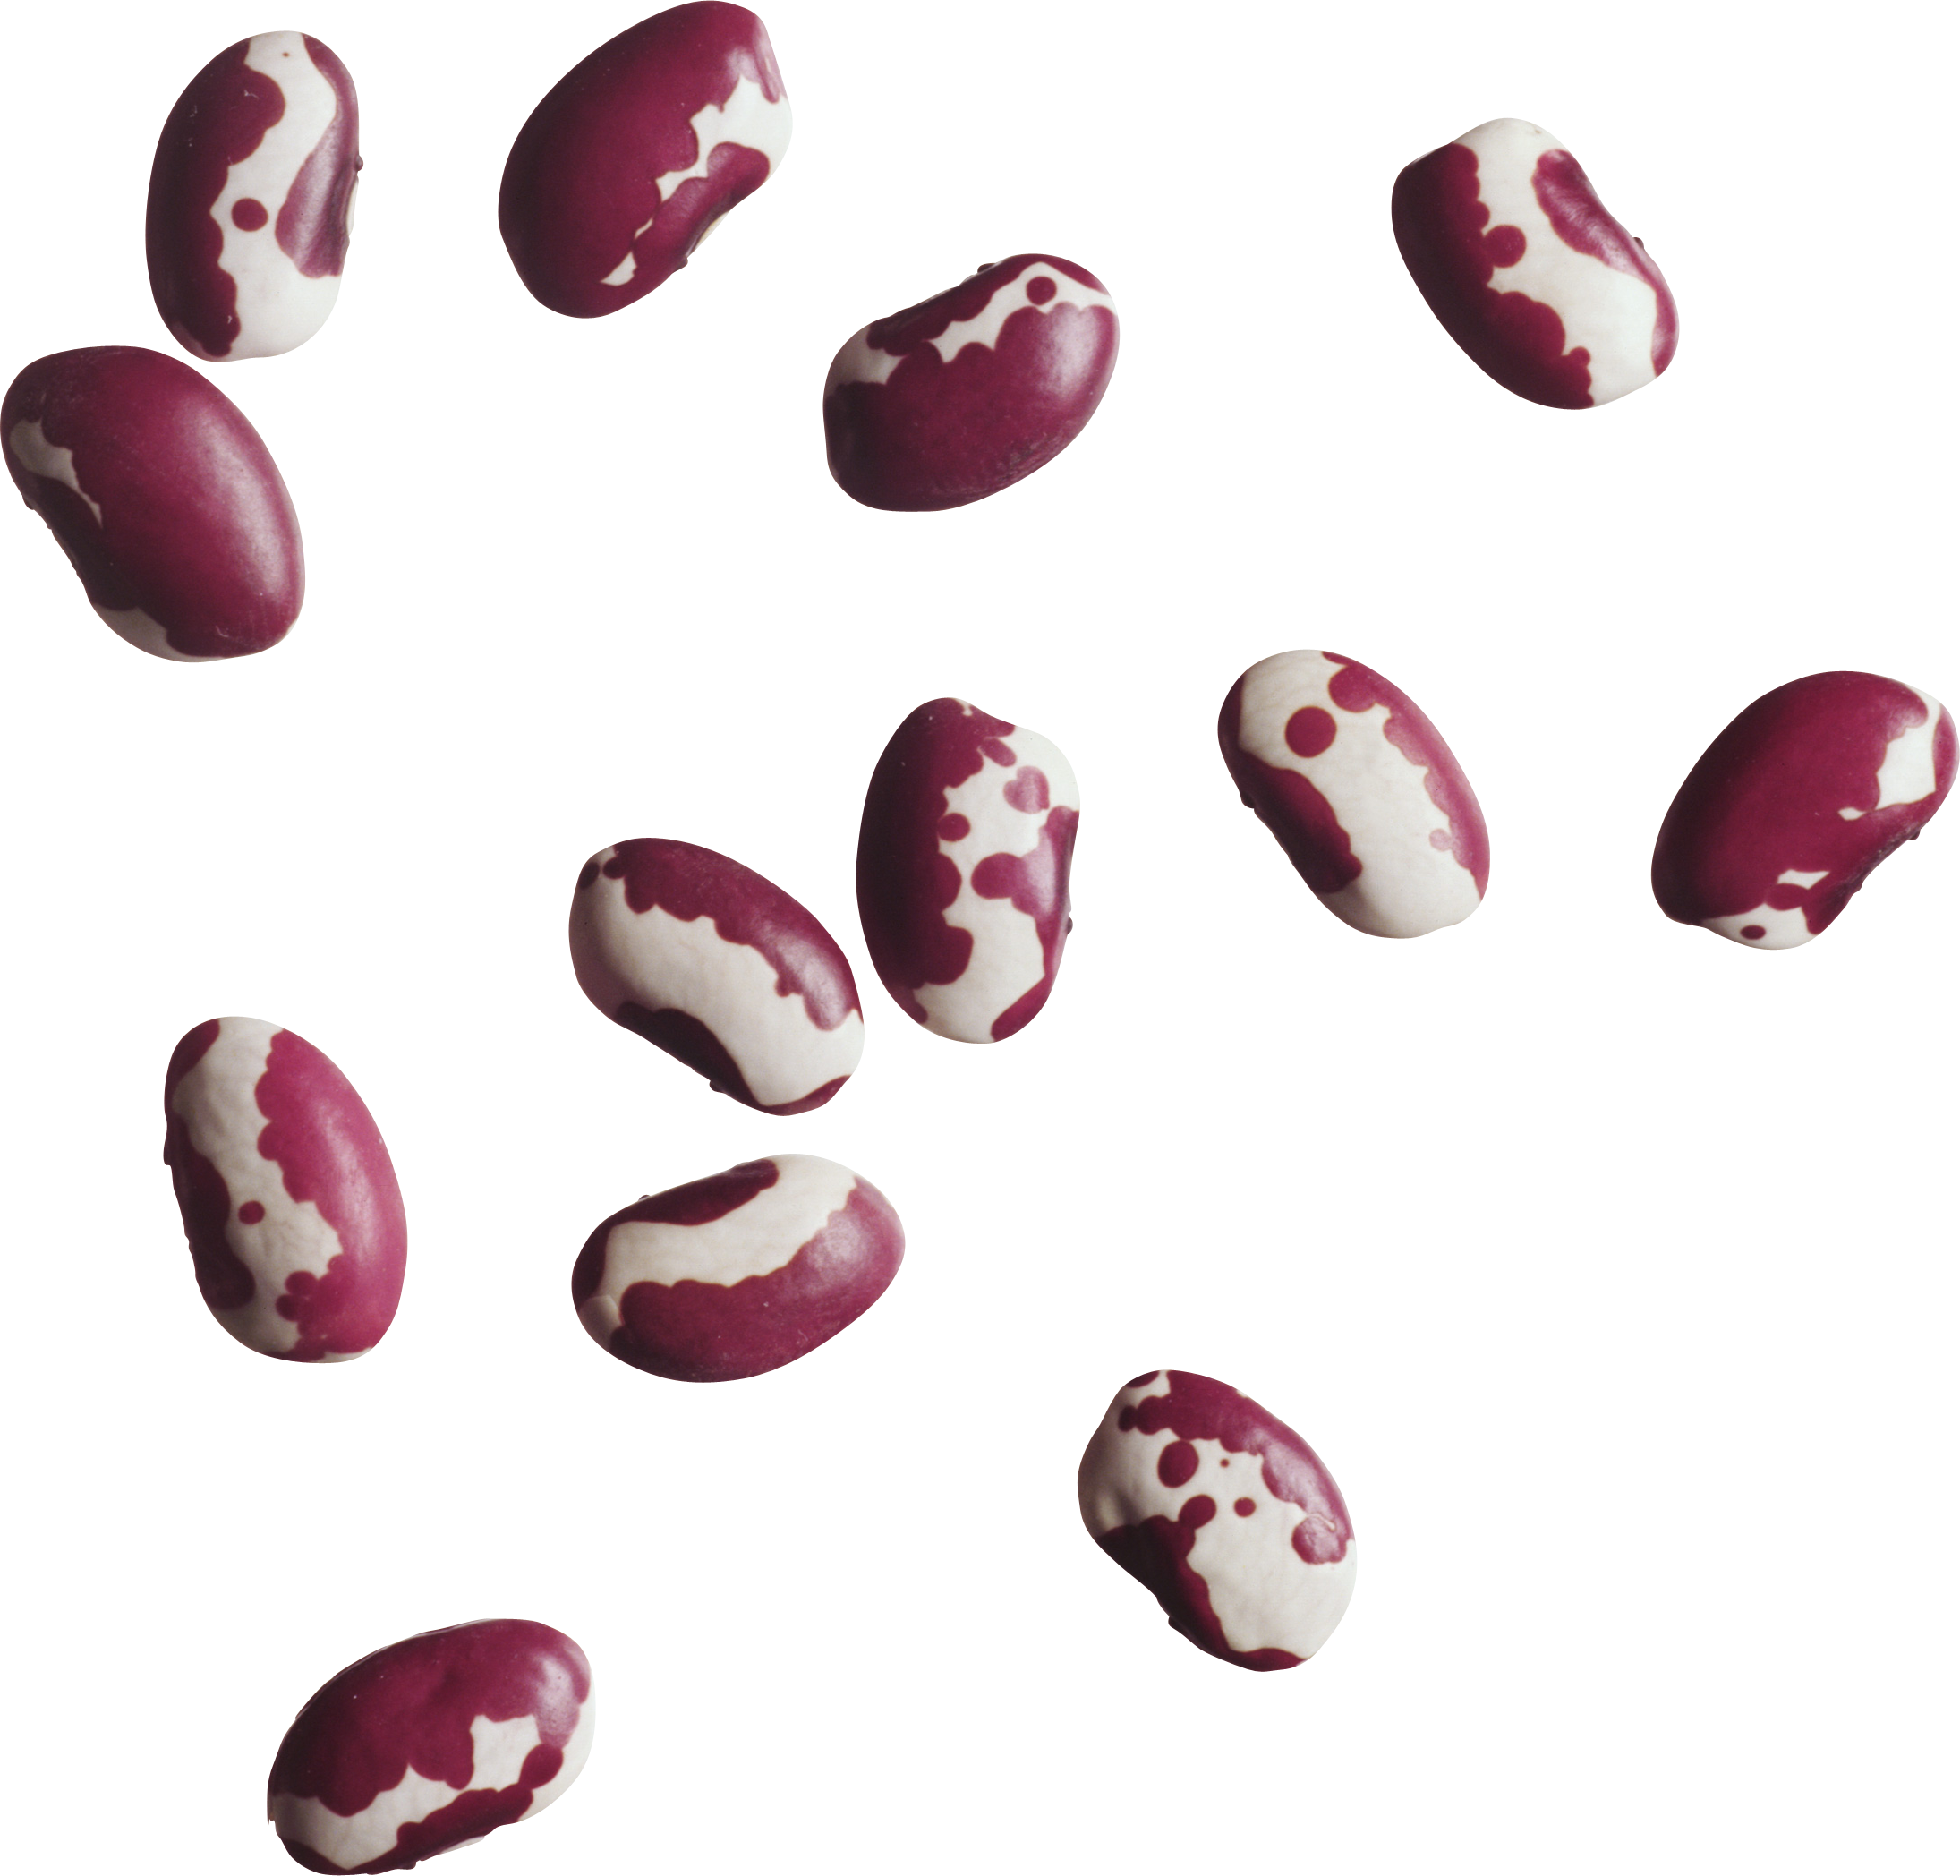 Kacang merah